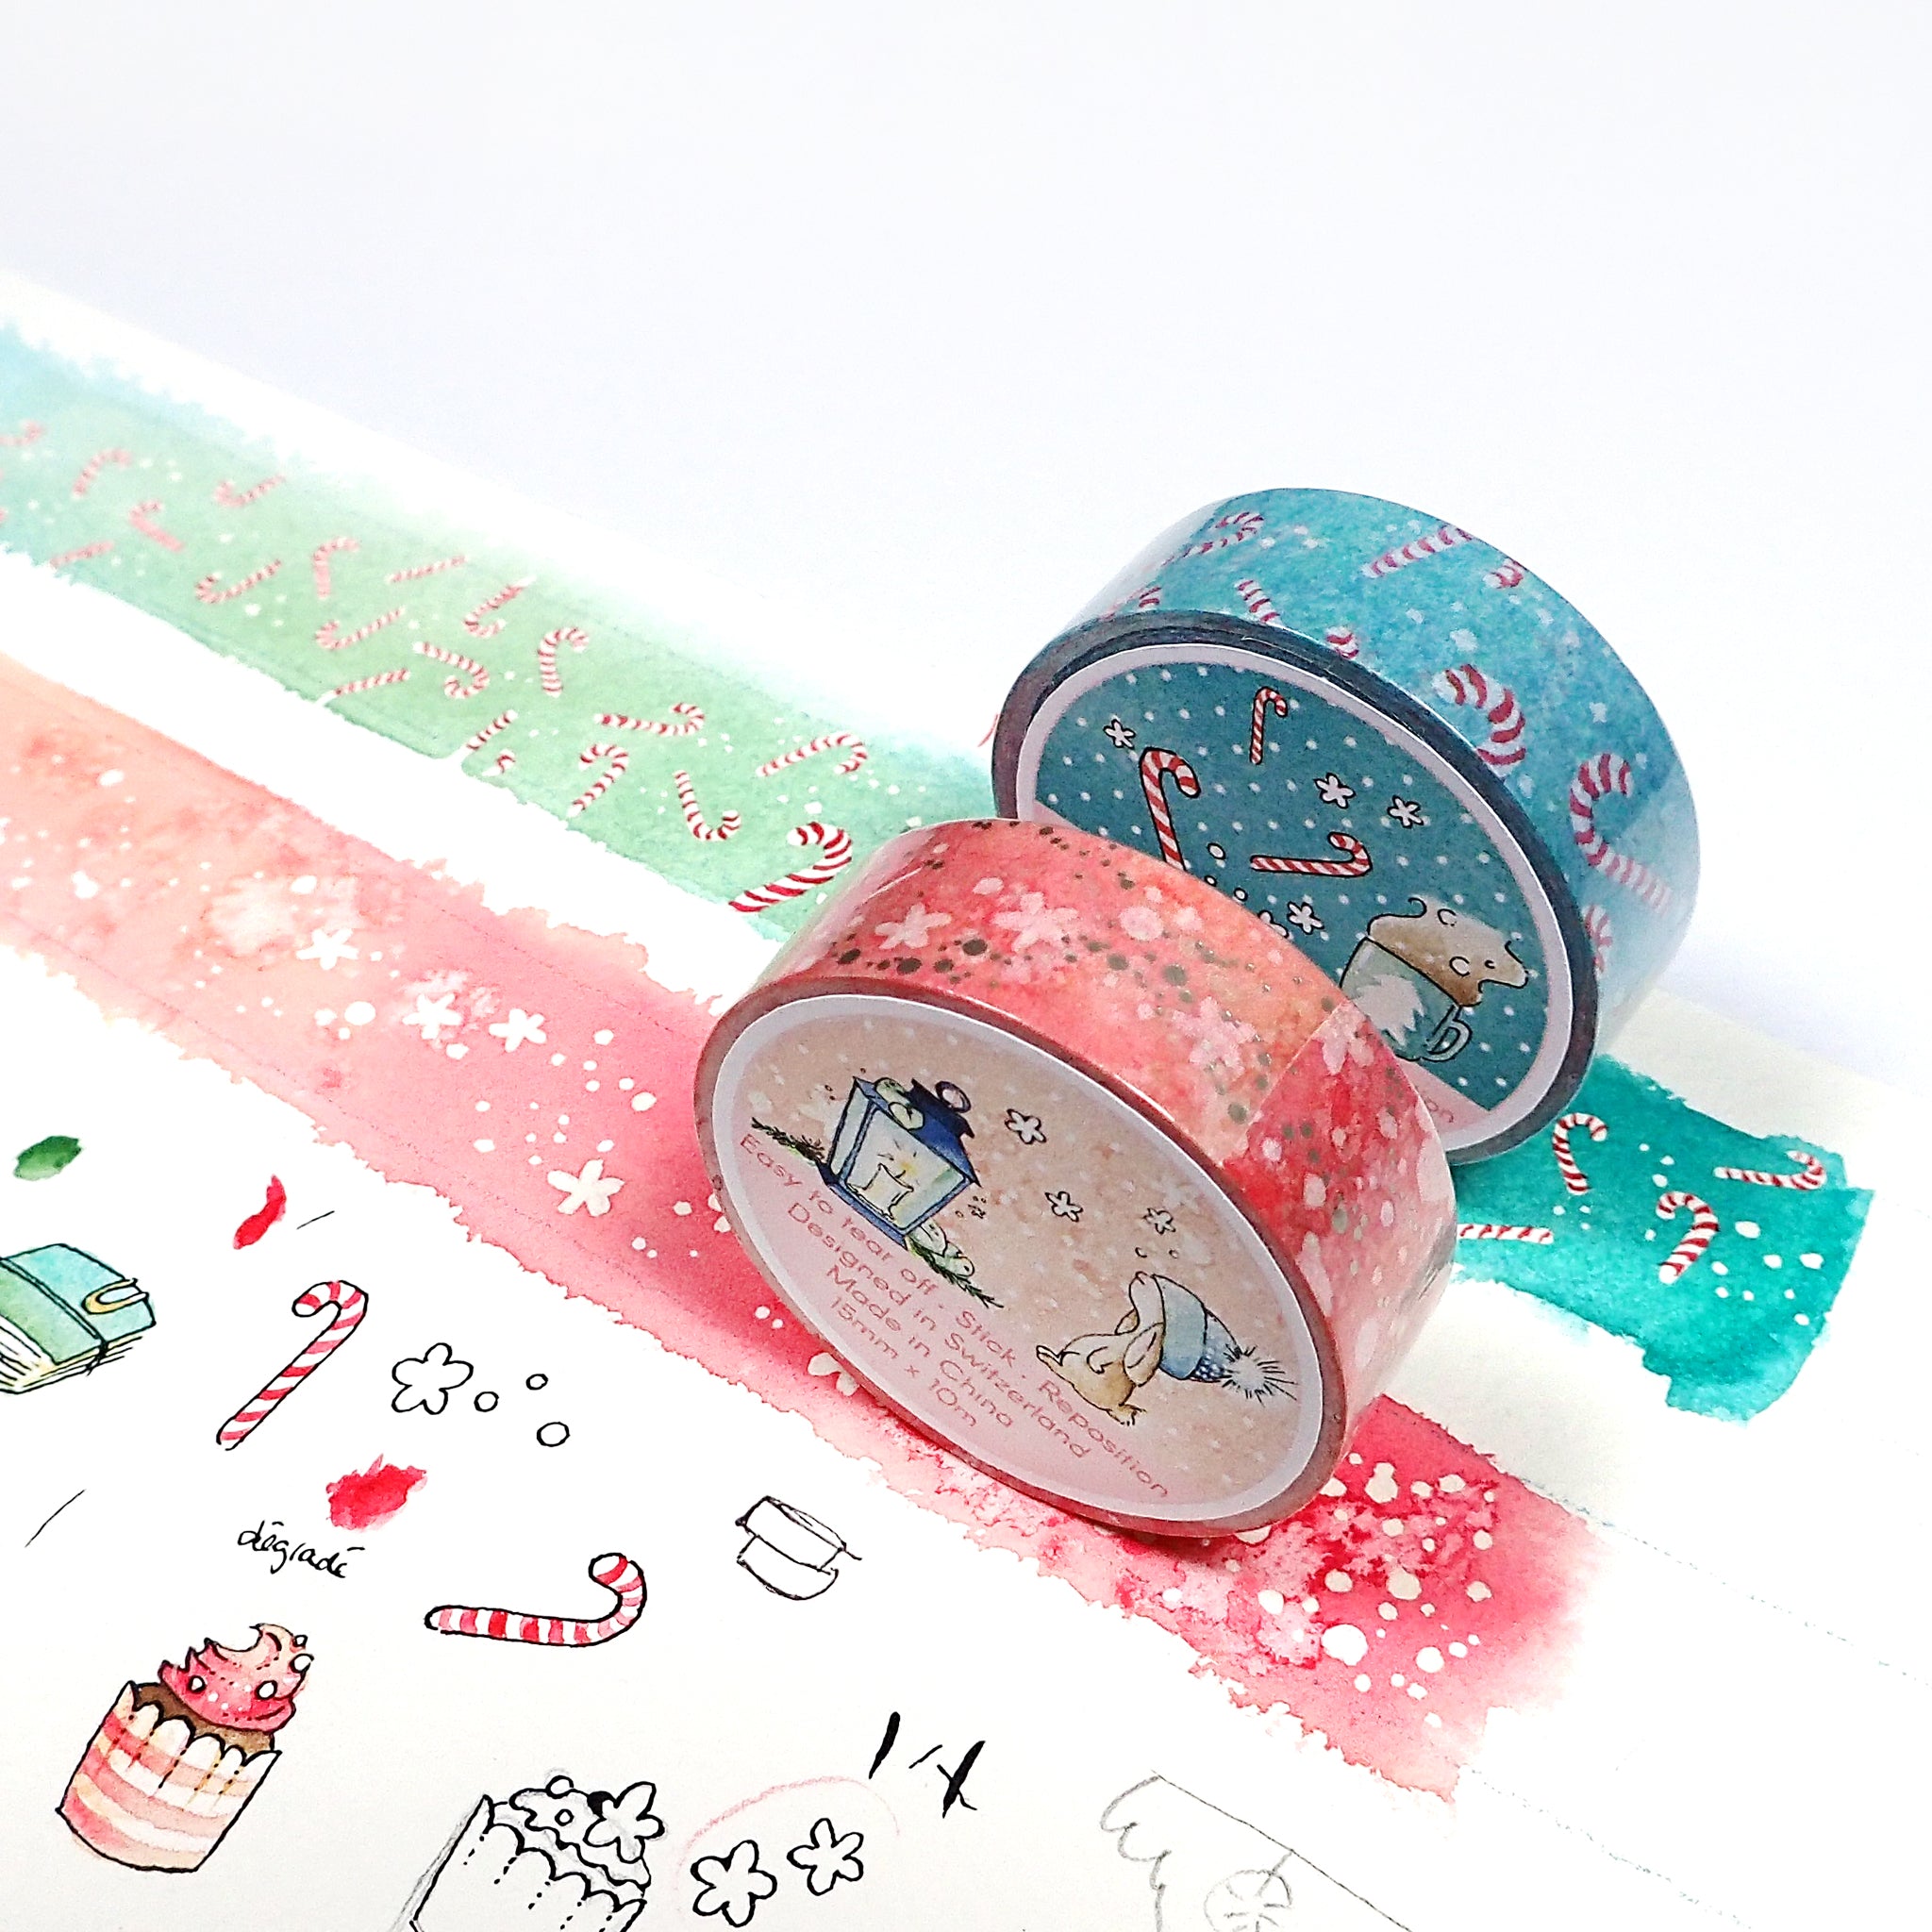 The Cute Christmas Washi Tape 